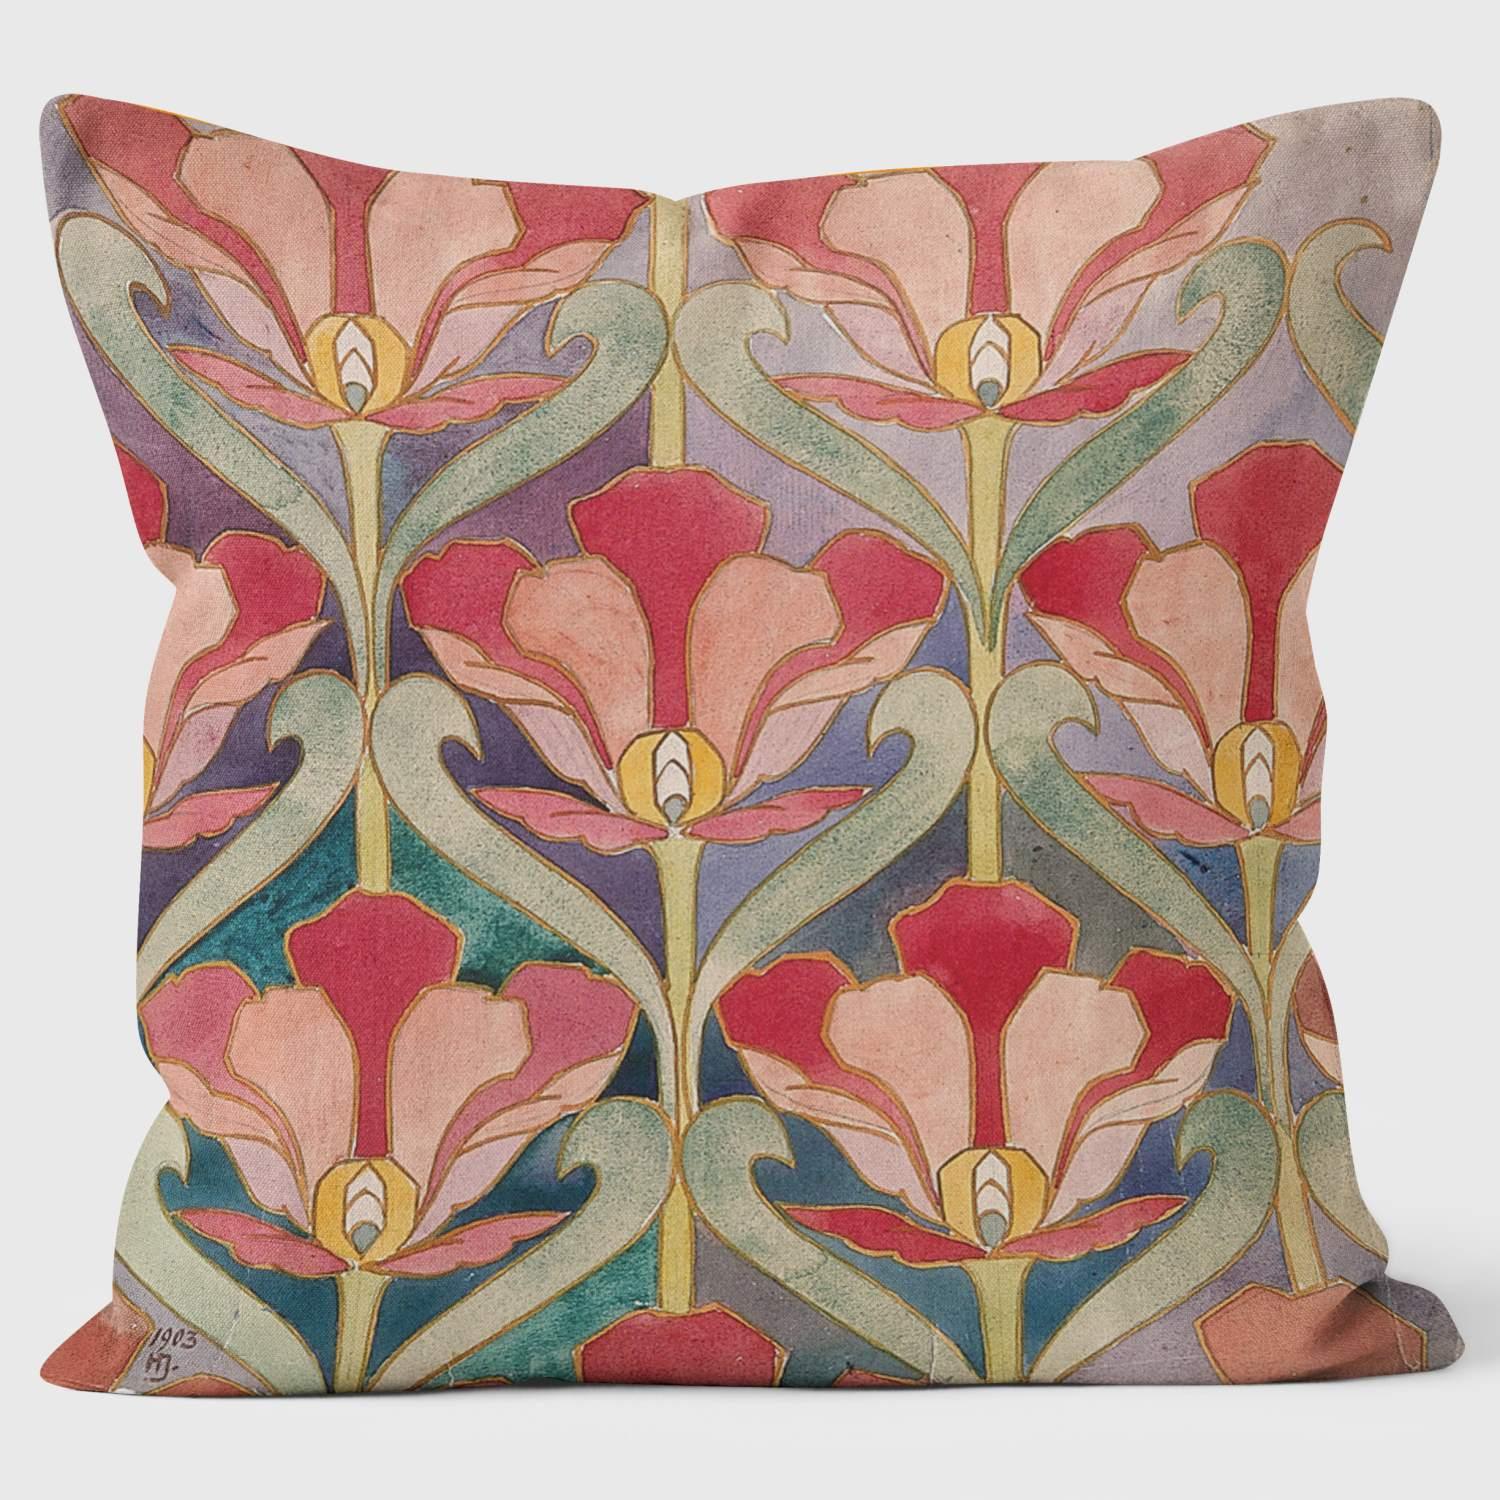 Flowers - Tate - The Russian Revolution Cushion - Handmade Cushions UK - WeLoveCushions